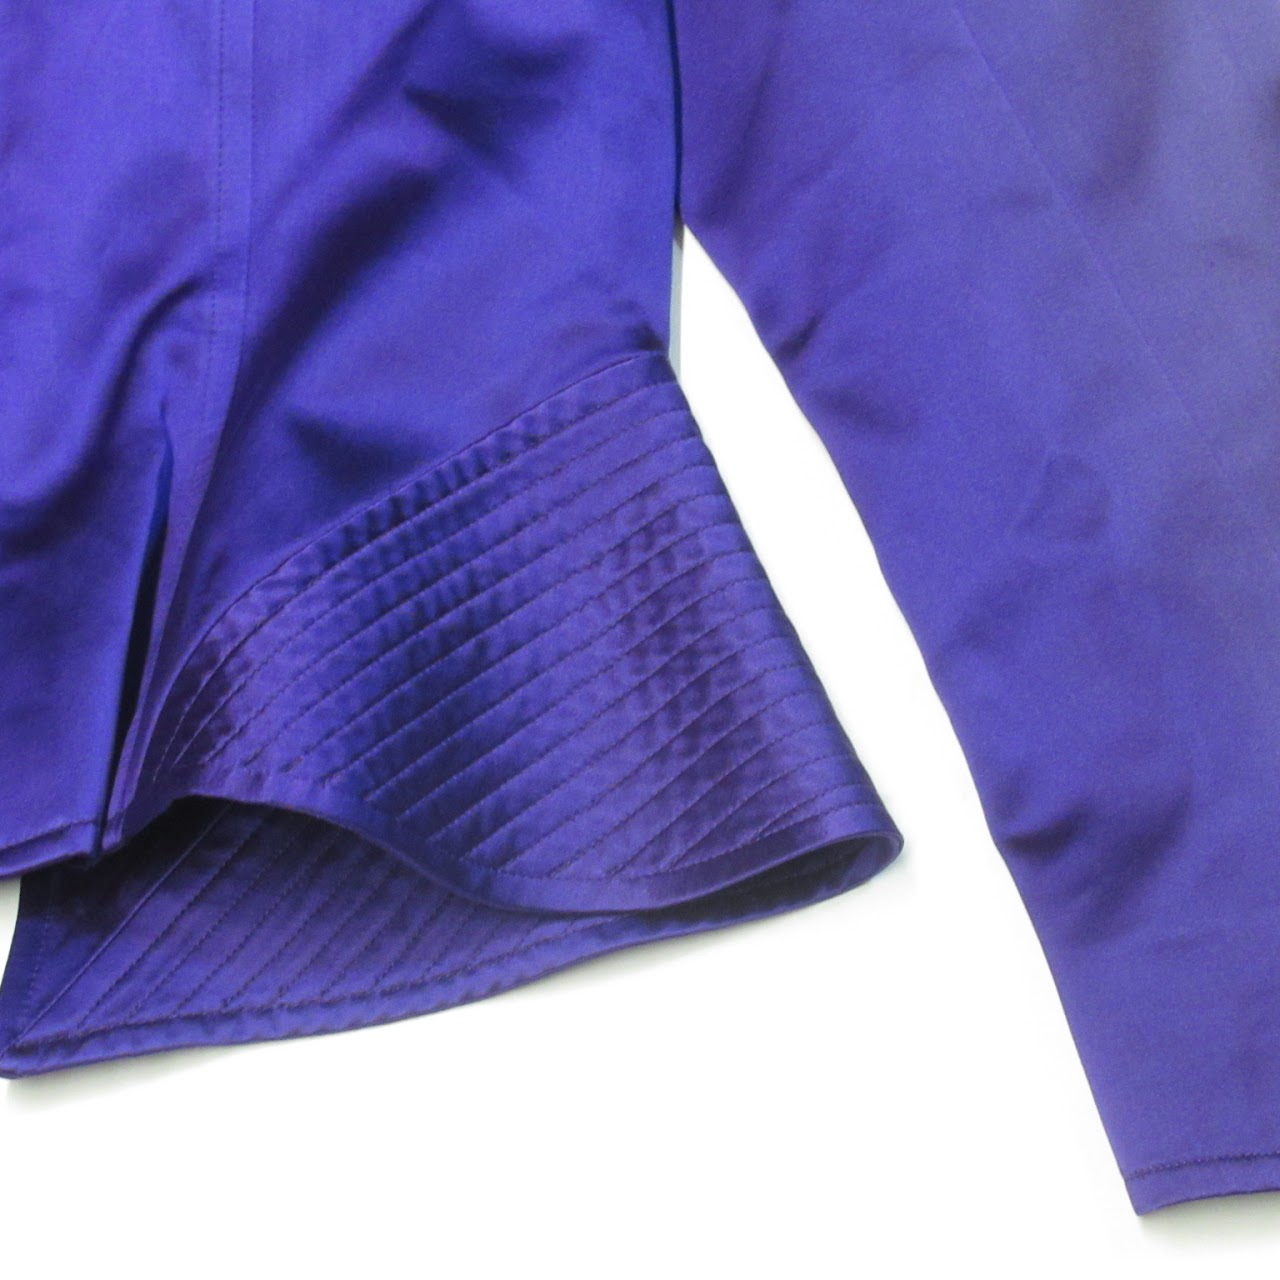 Christian Lacroix Royal Purple Jacket